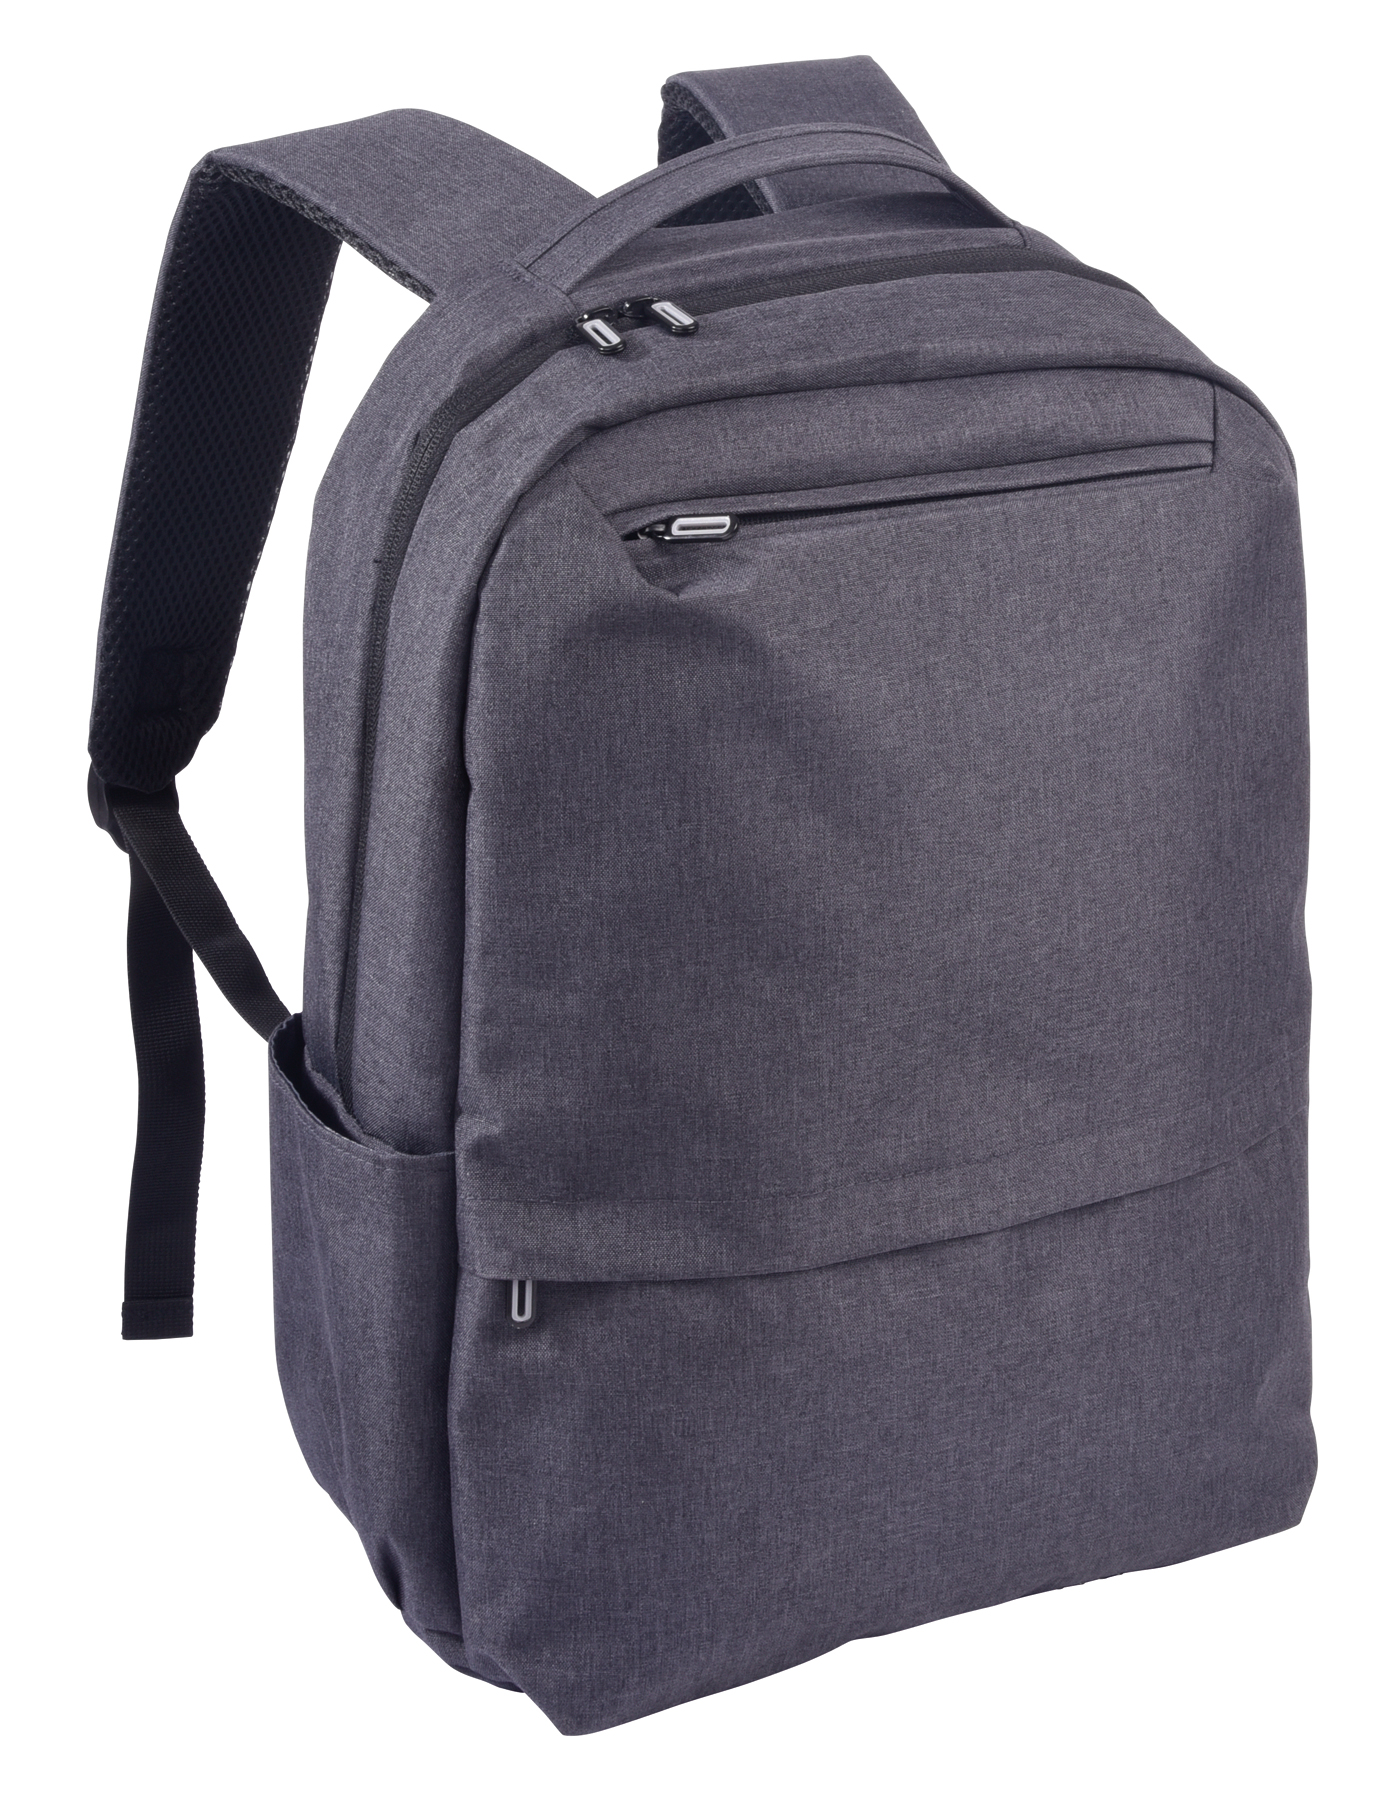 Backpack STOCKHOLM - stone grey